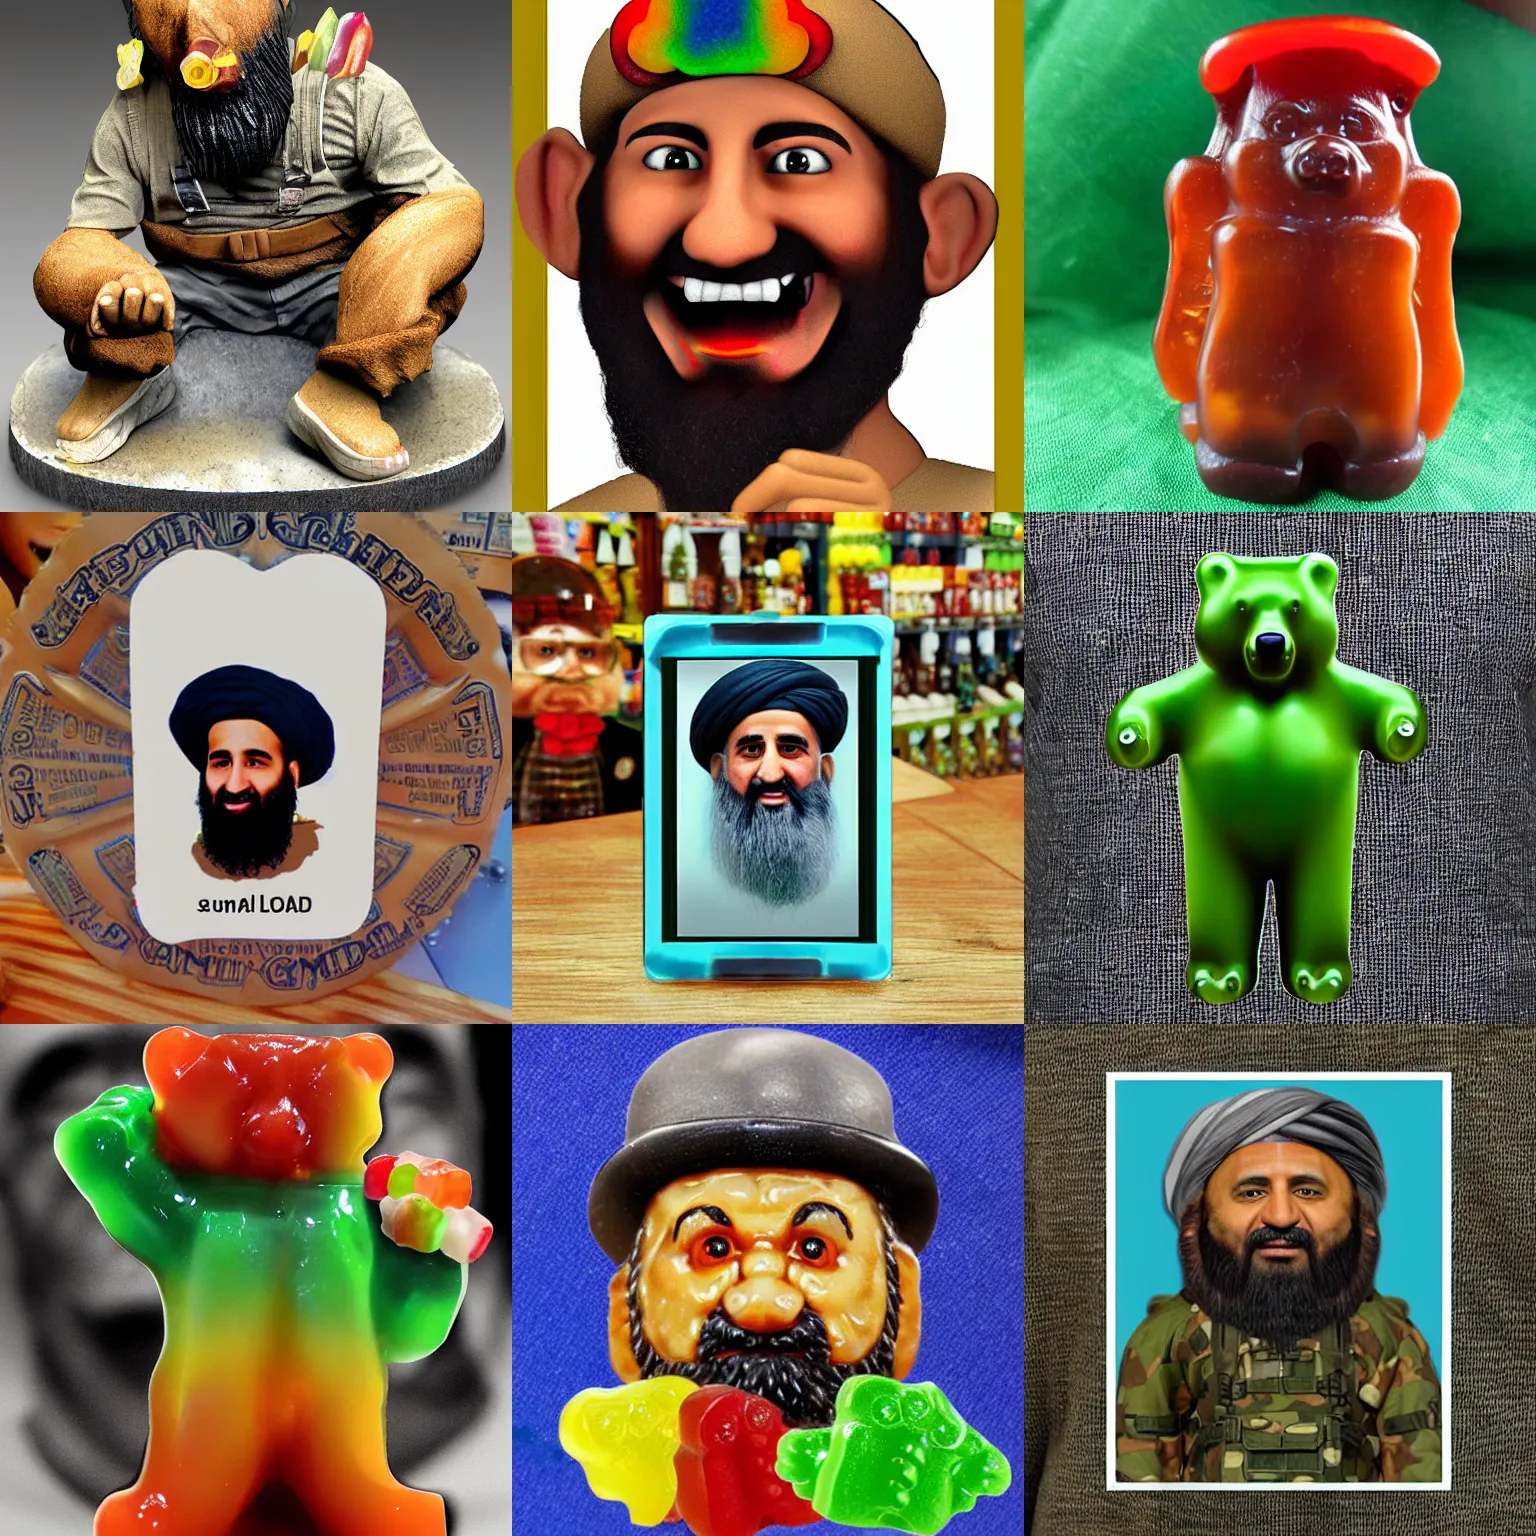 Prompt: realistic gummy bear osama ben Laden